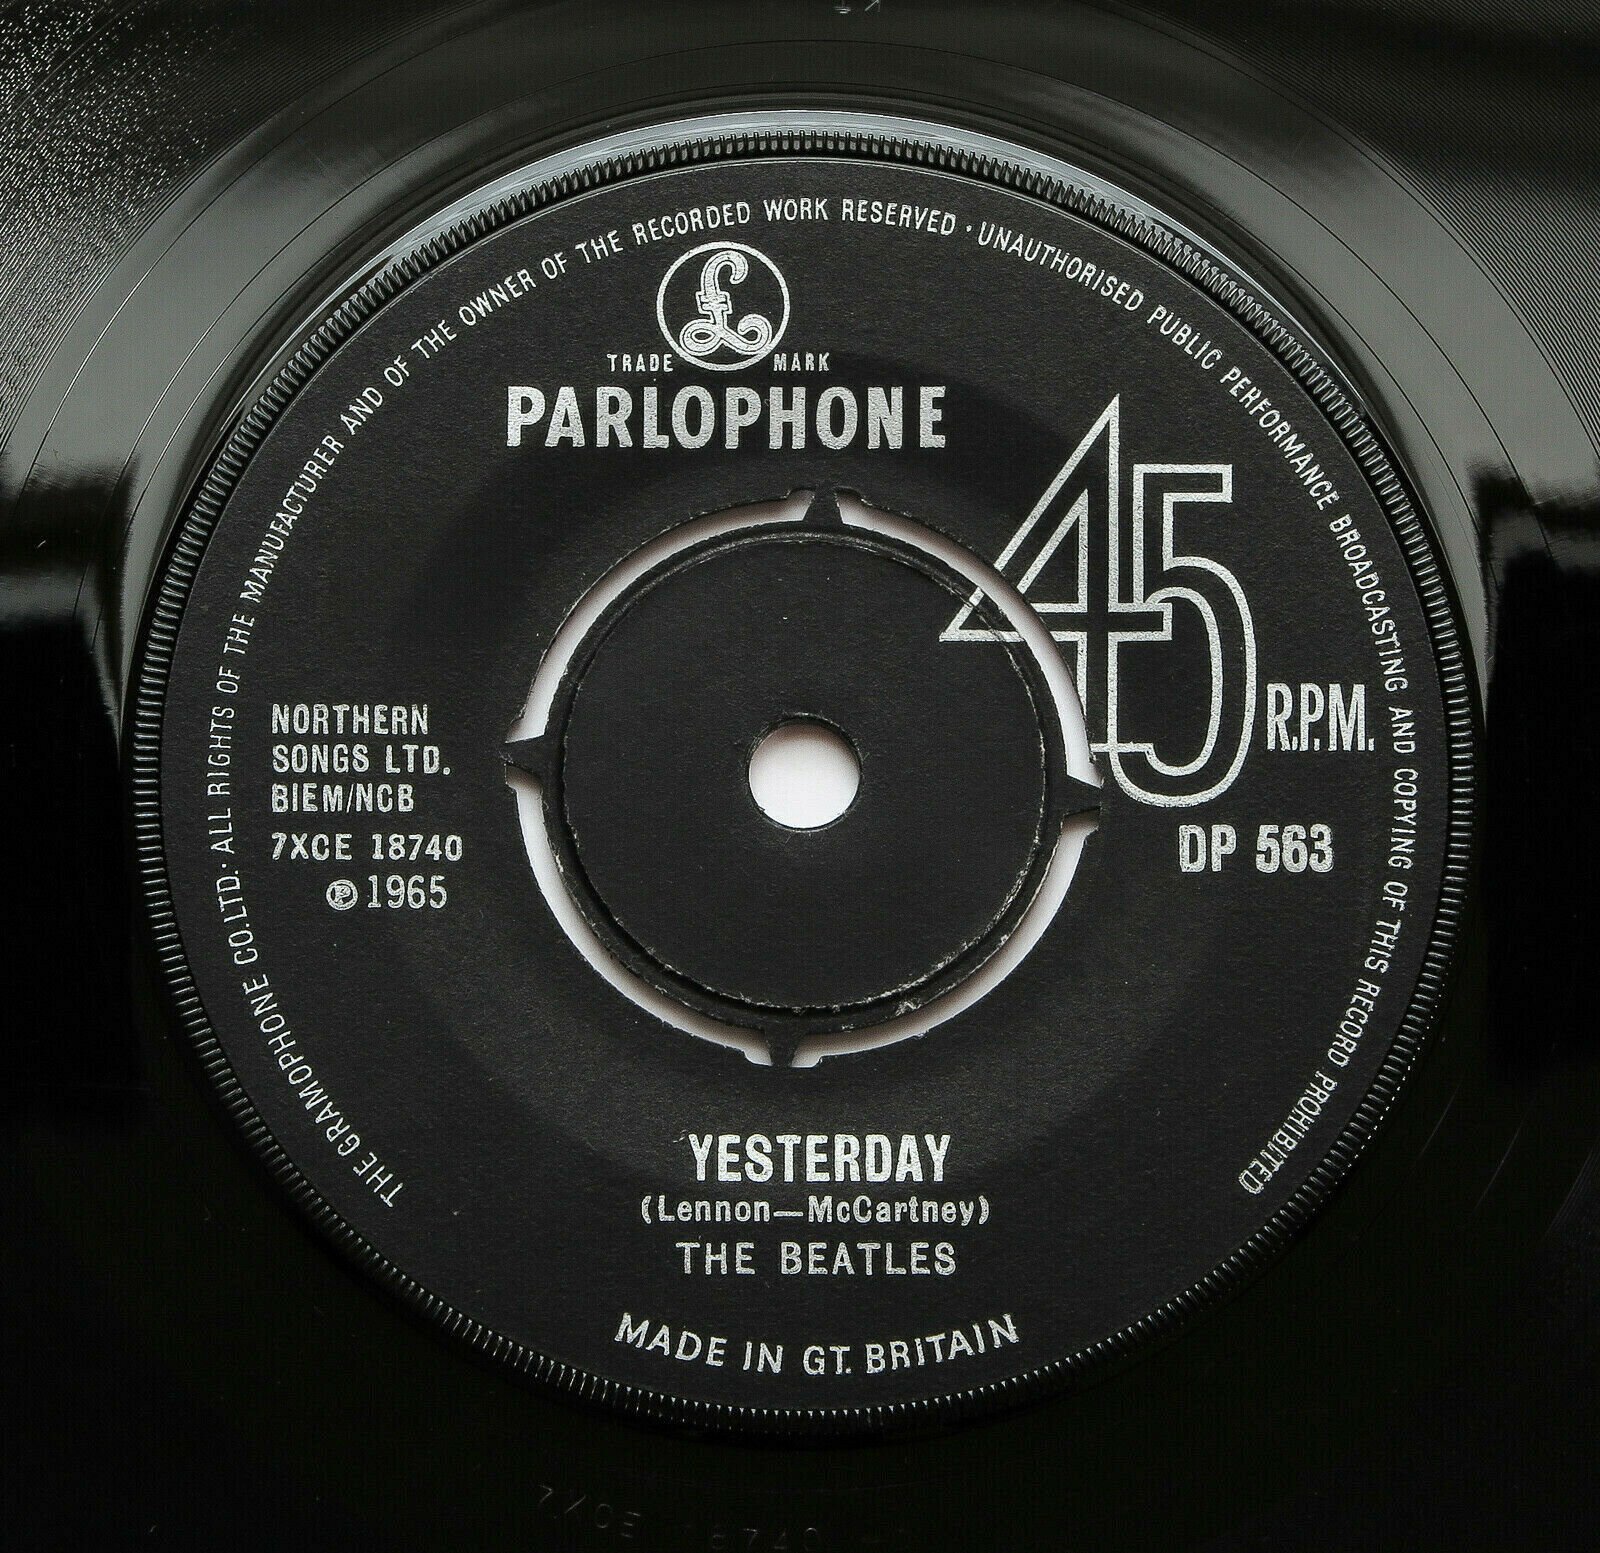 The Beatles - Yesterday/Dizzy Miss Lizzy - UK 1965 *EXPORT* Parl. 45 DP 563 EX+